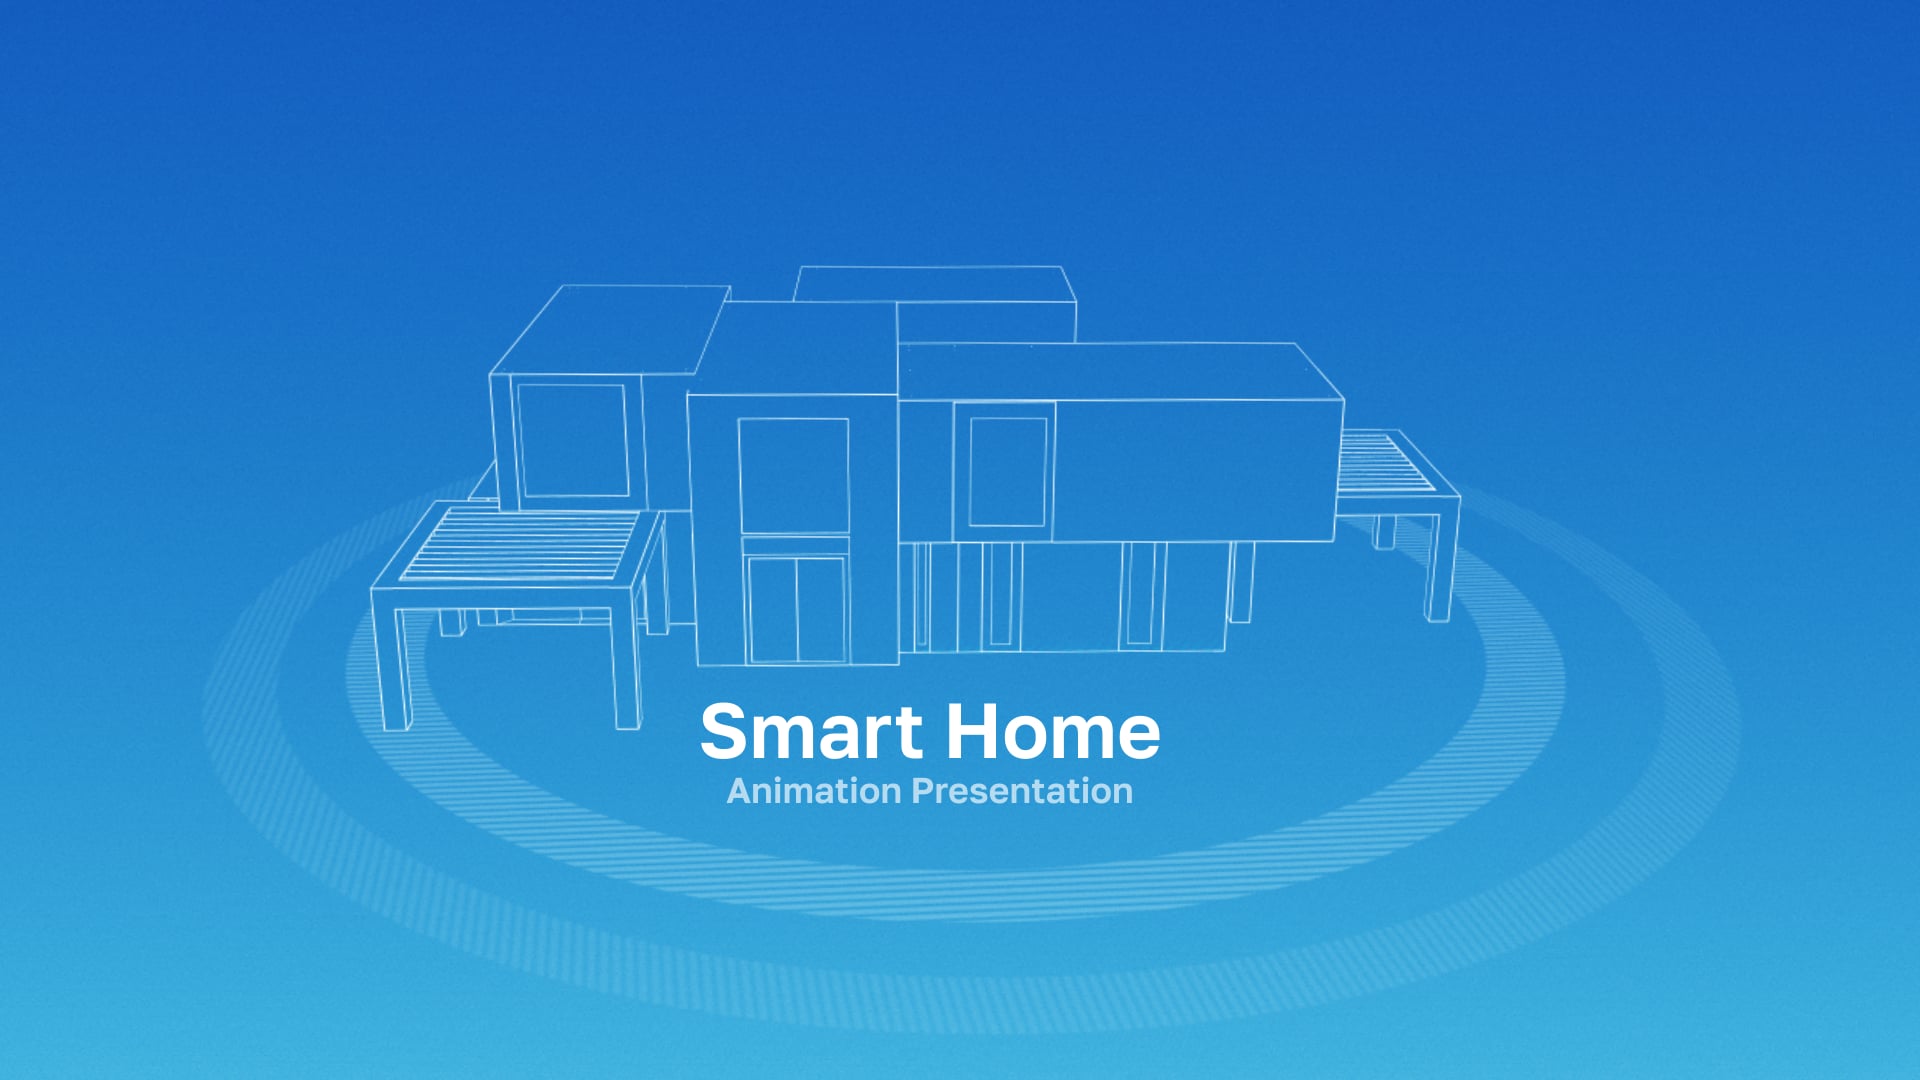 Smart Home - Animation Presentation